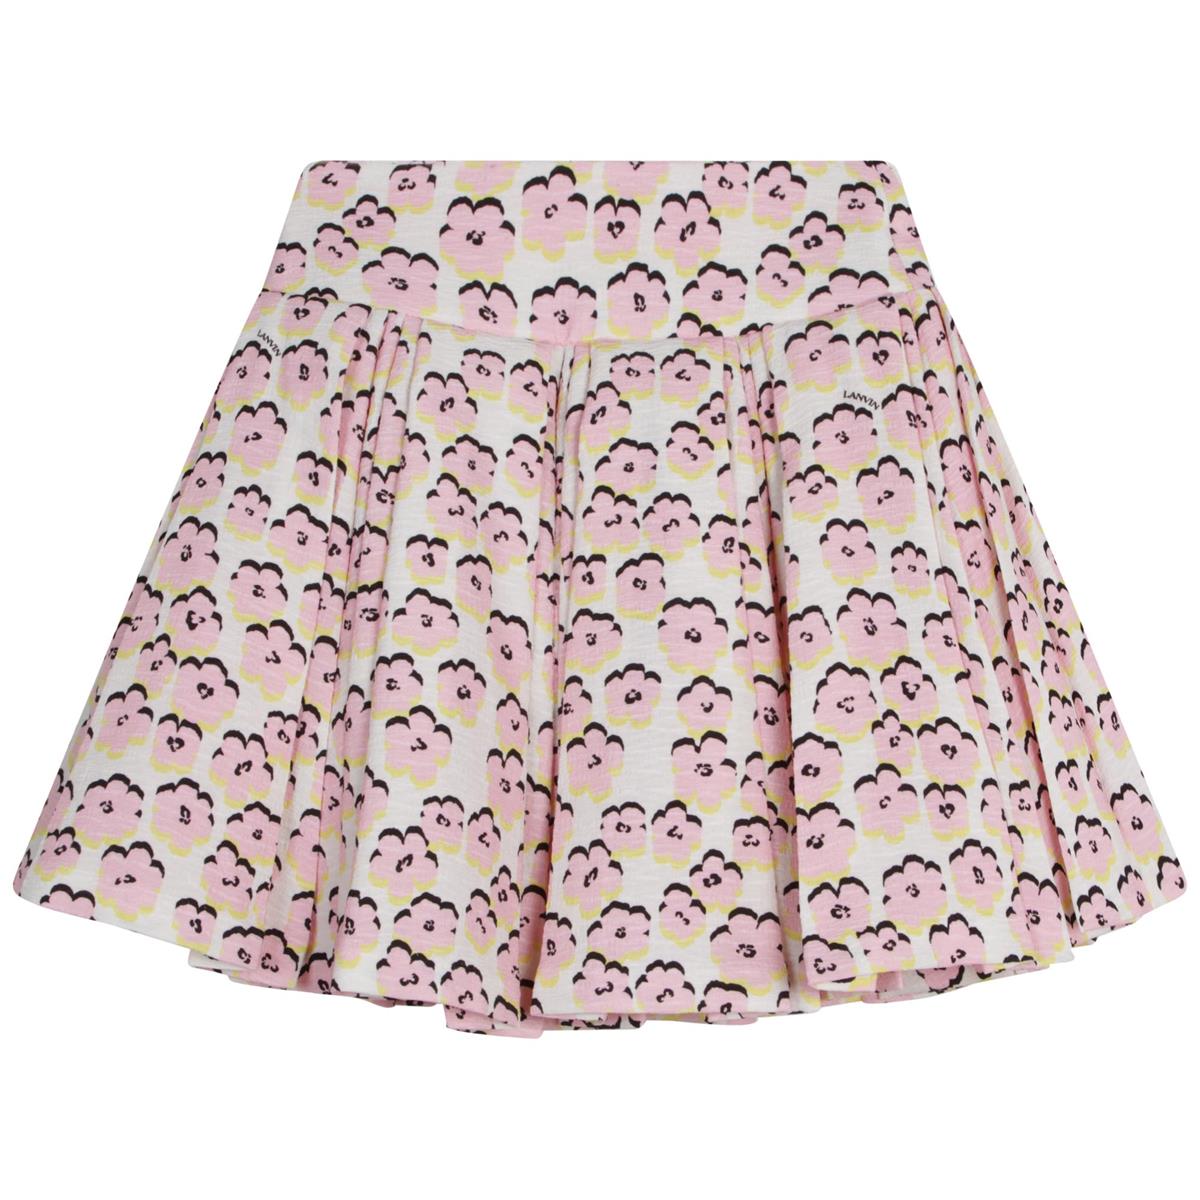 Girls Pink Floral Skirt